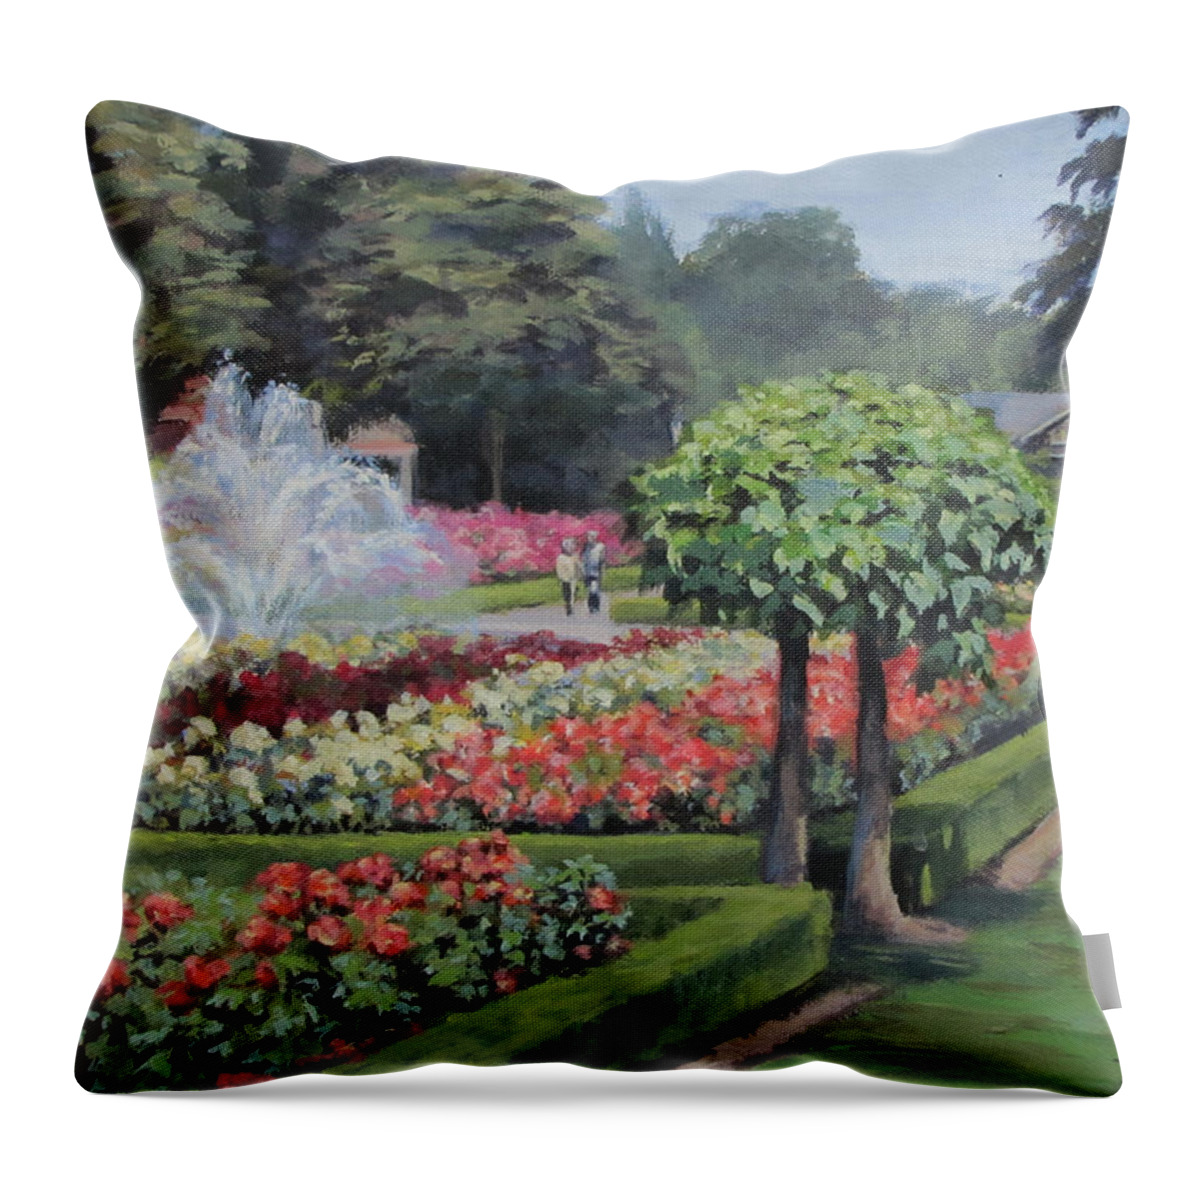 Rose Throw Pillow featuring the painting The Rose Garden by Karen Ilari